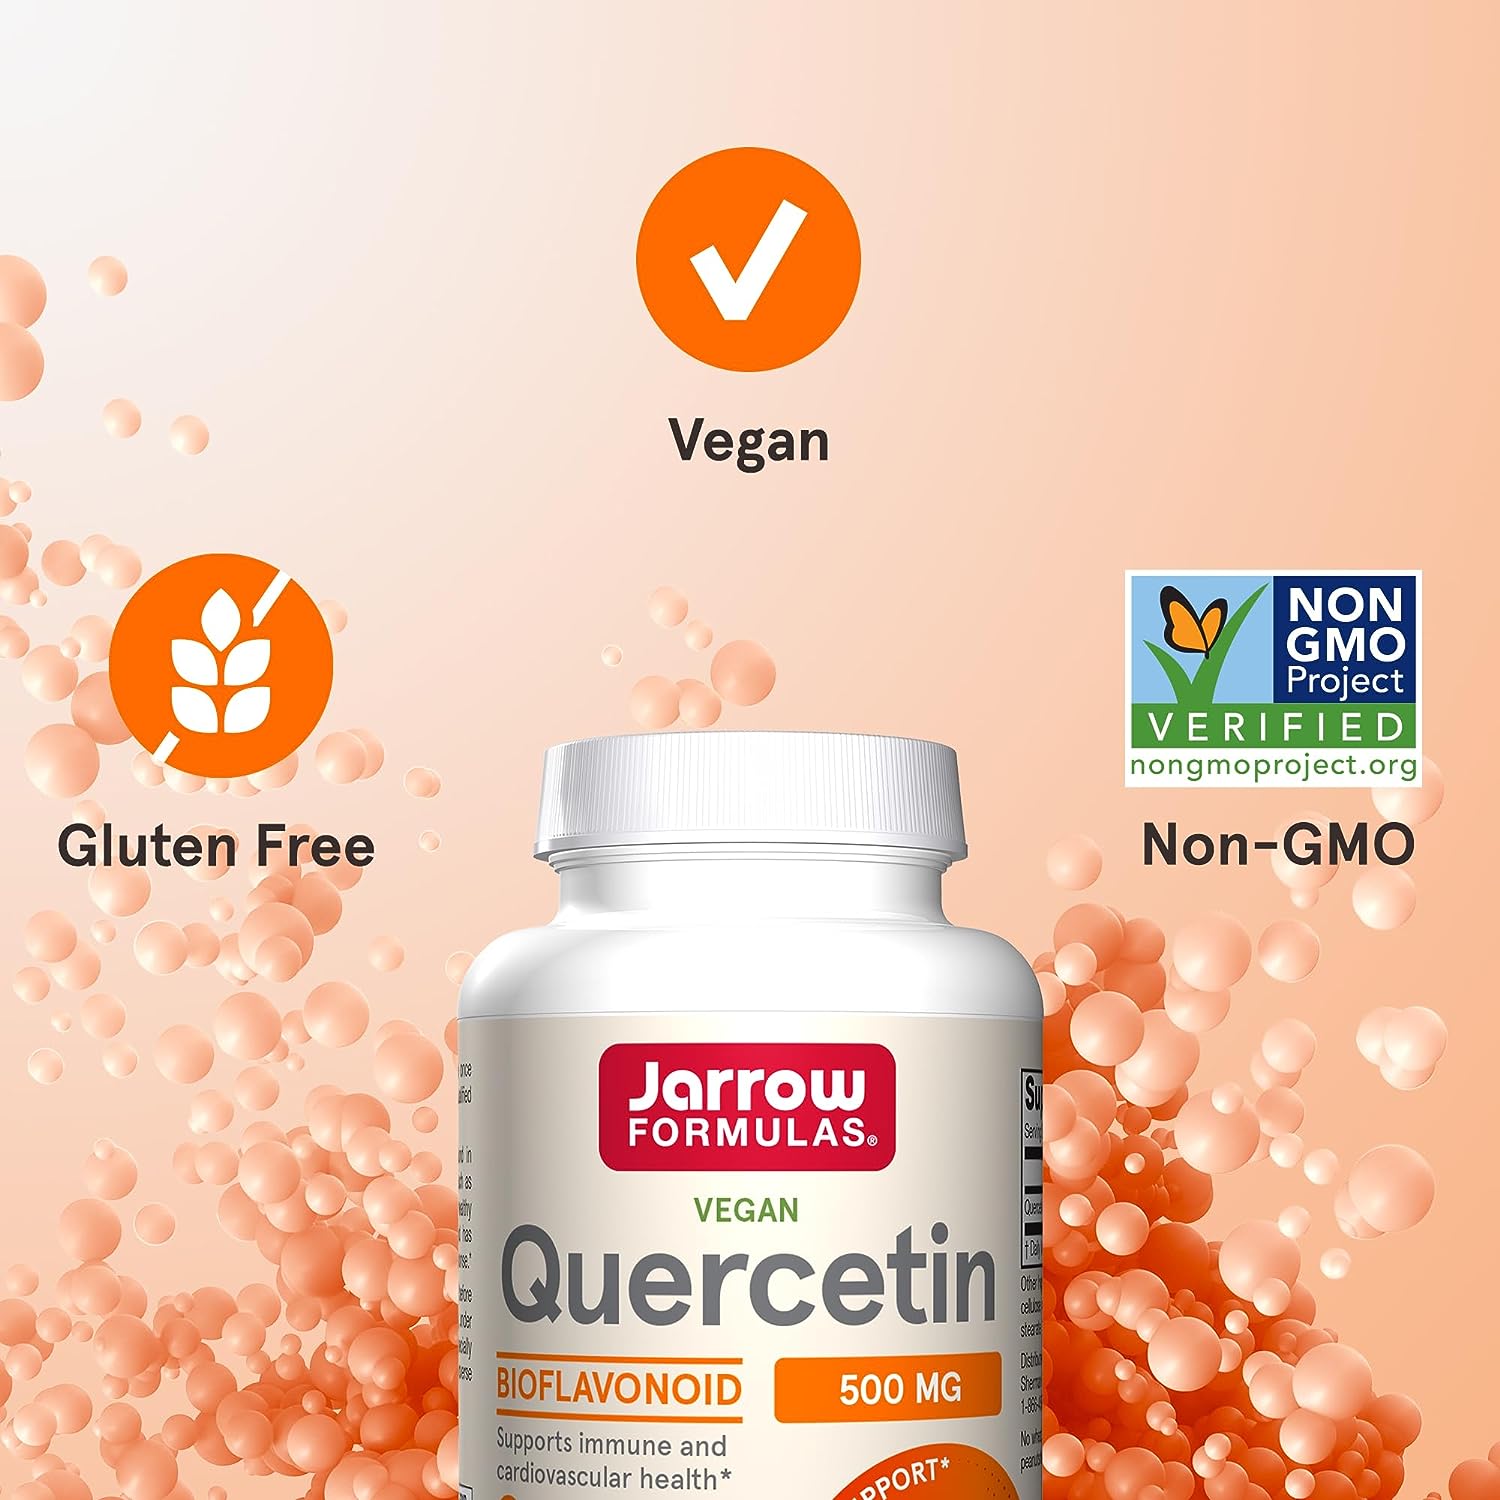 Jarrow Formulas Quercetin 500 mg - Bioflavonoid - Quercetin Dietary Supplement - 100 Servings (Veggie Caps) - Supports Cellular Function, Cardiovascular Health, Immune Health  Response